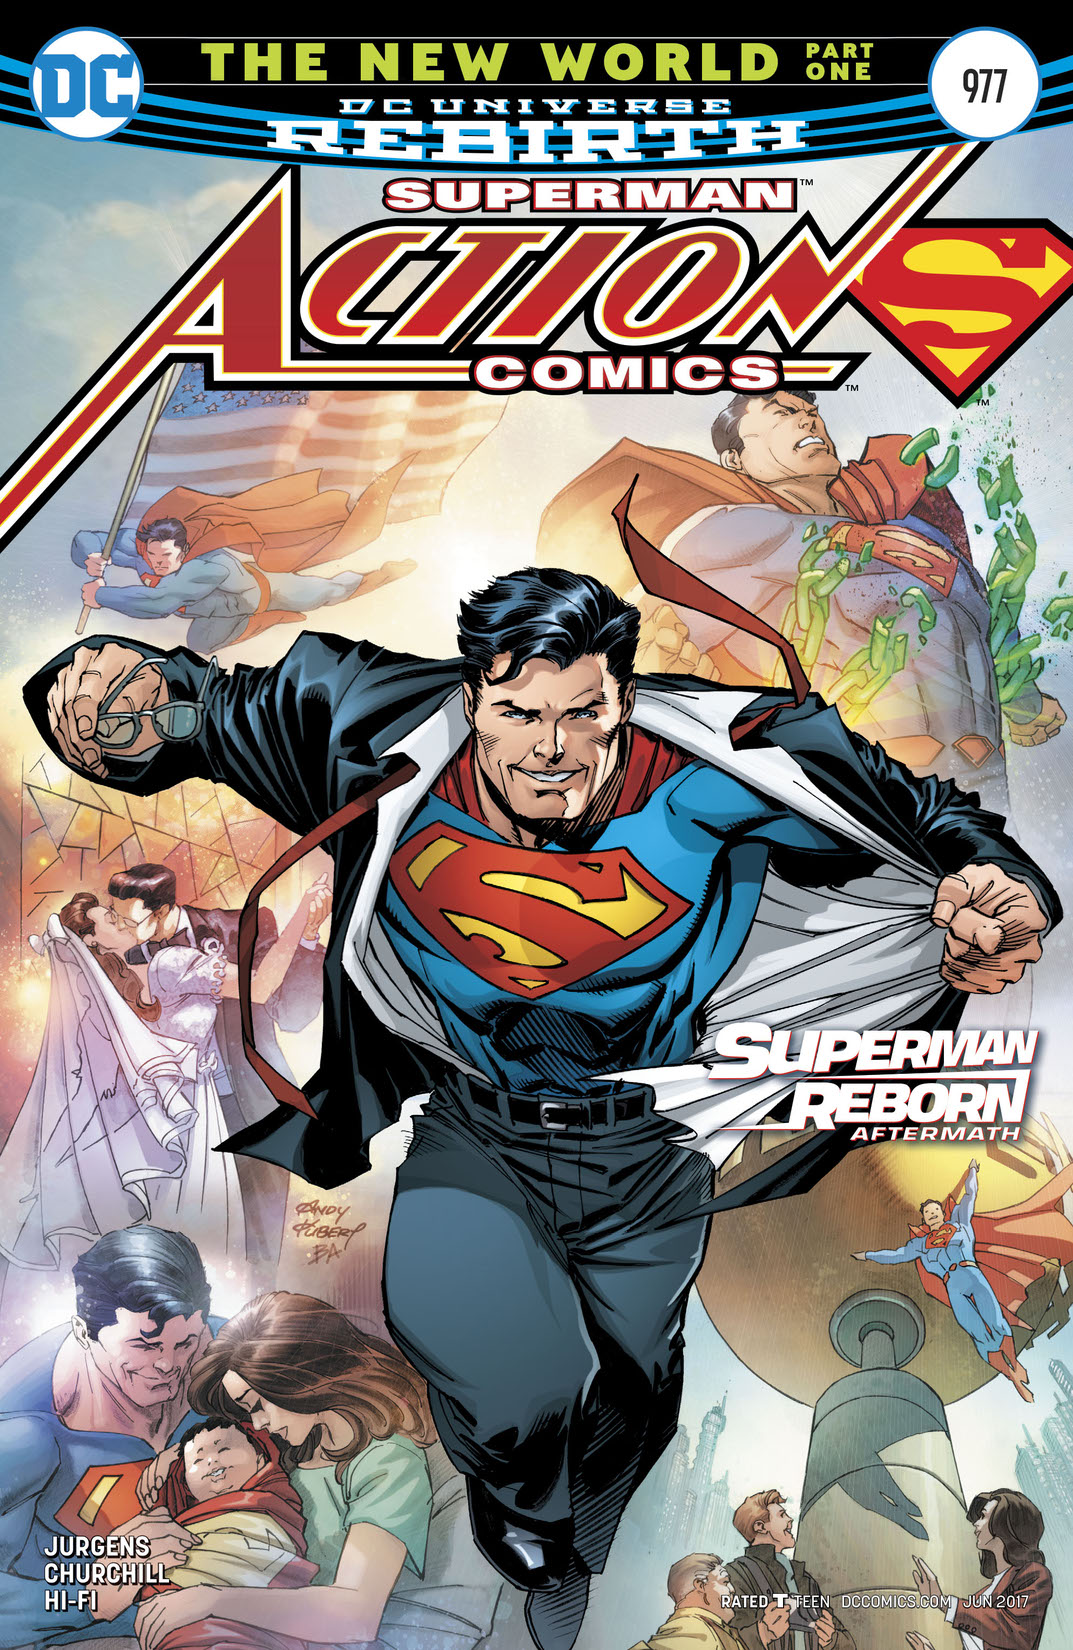 Action Comics (2016-) #977 preview images